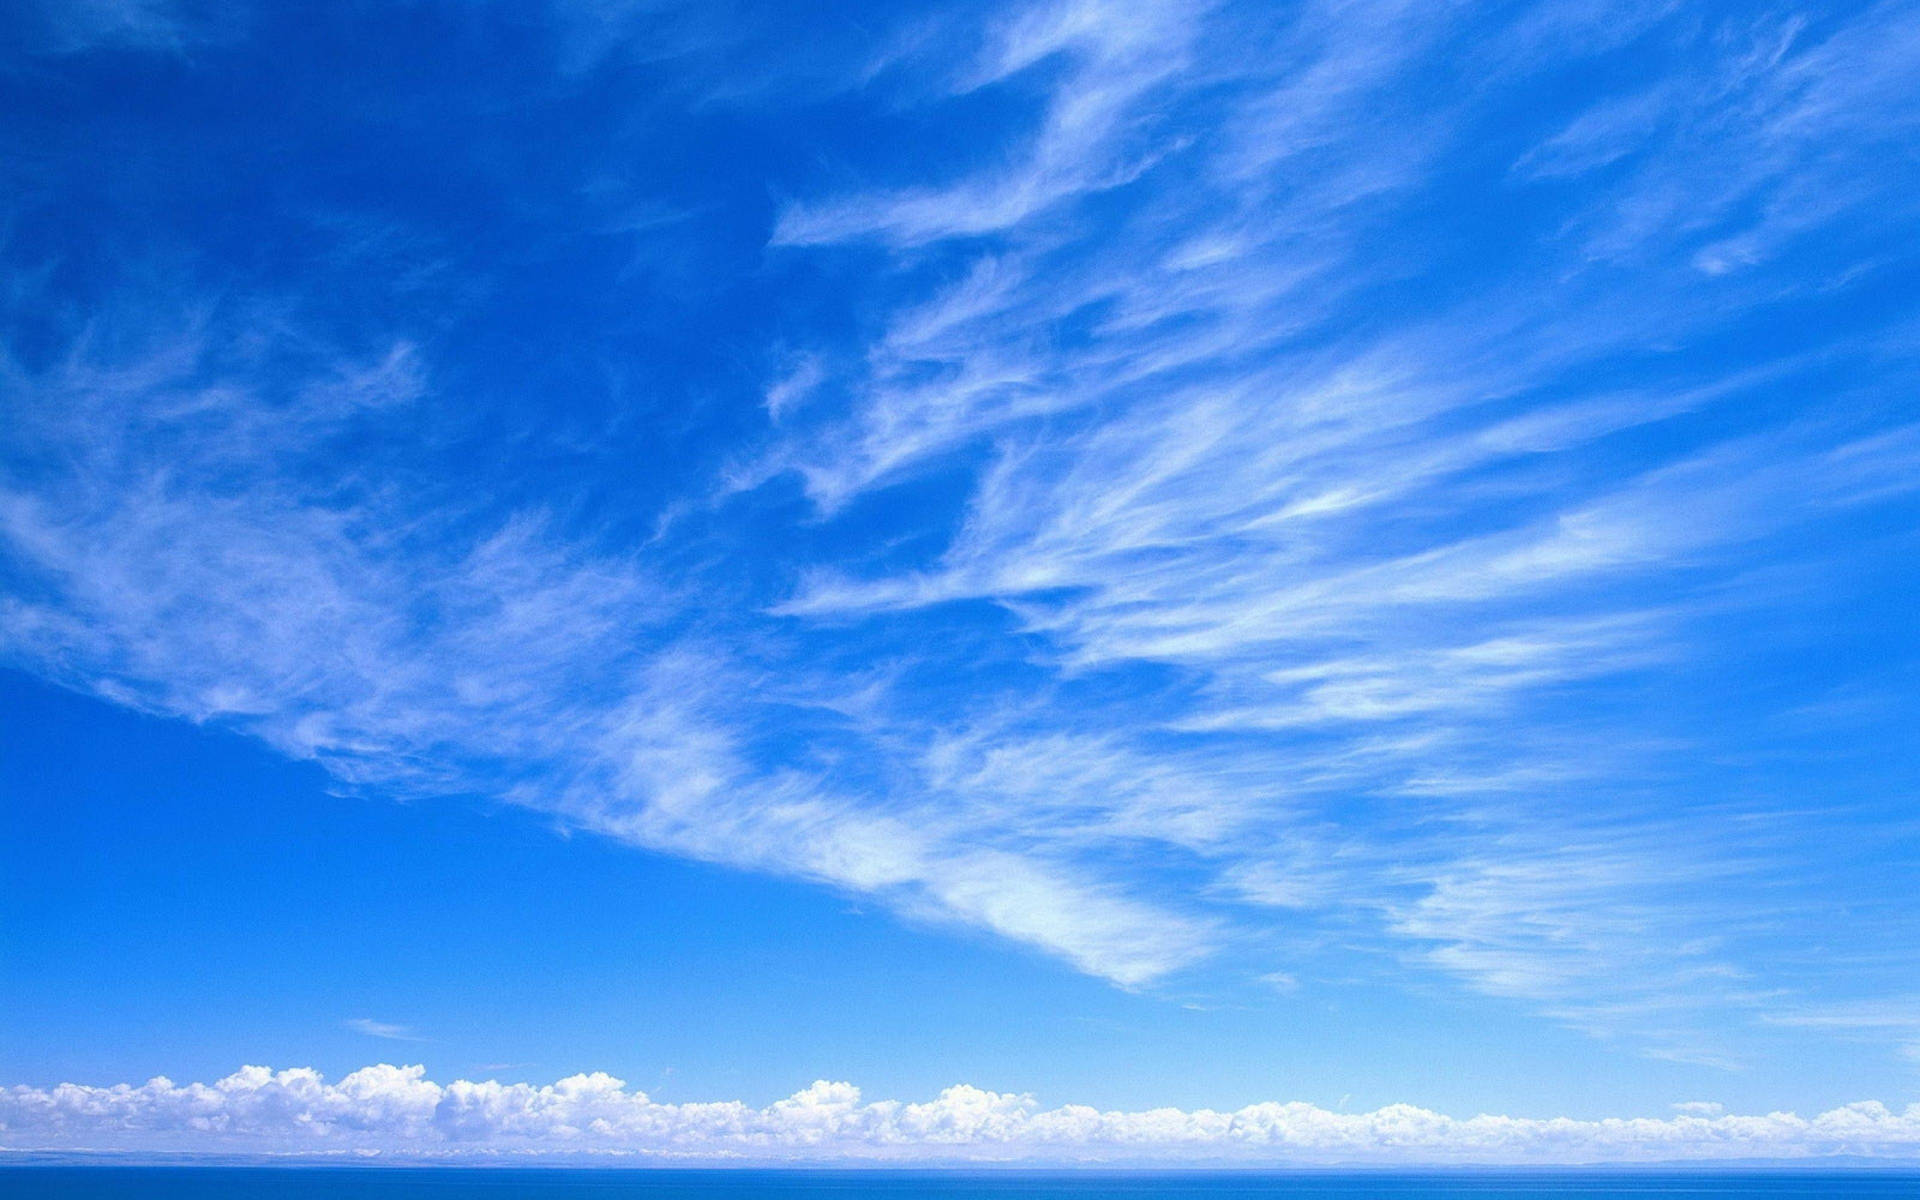 Clear Sky With Wispy Clouds Background